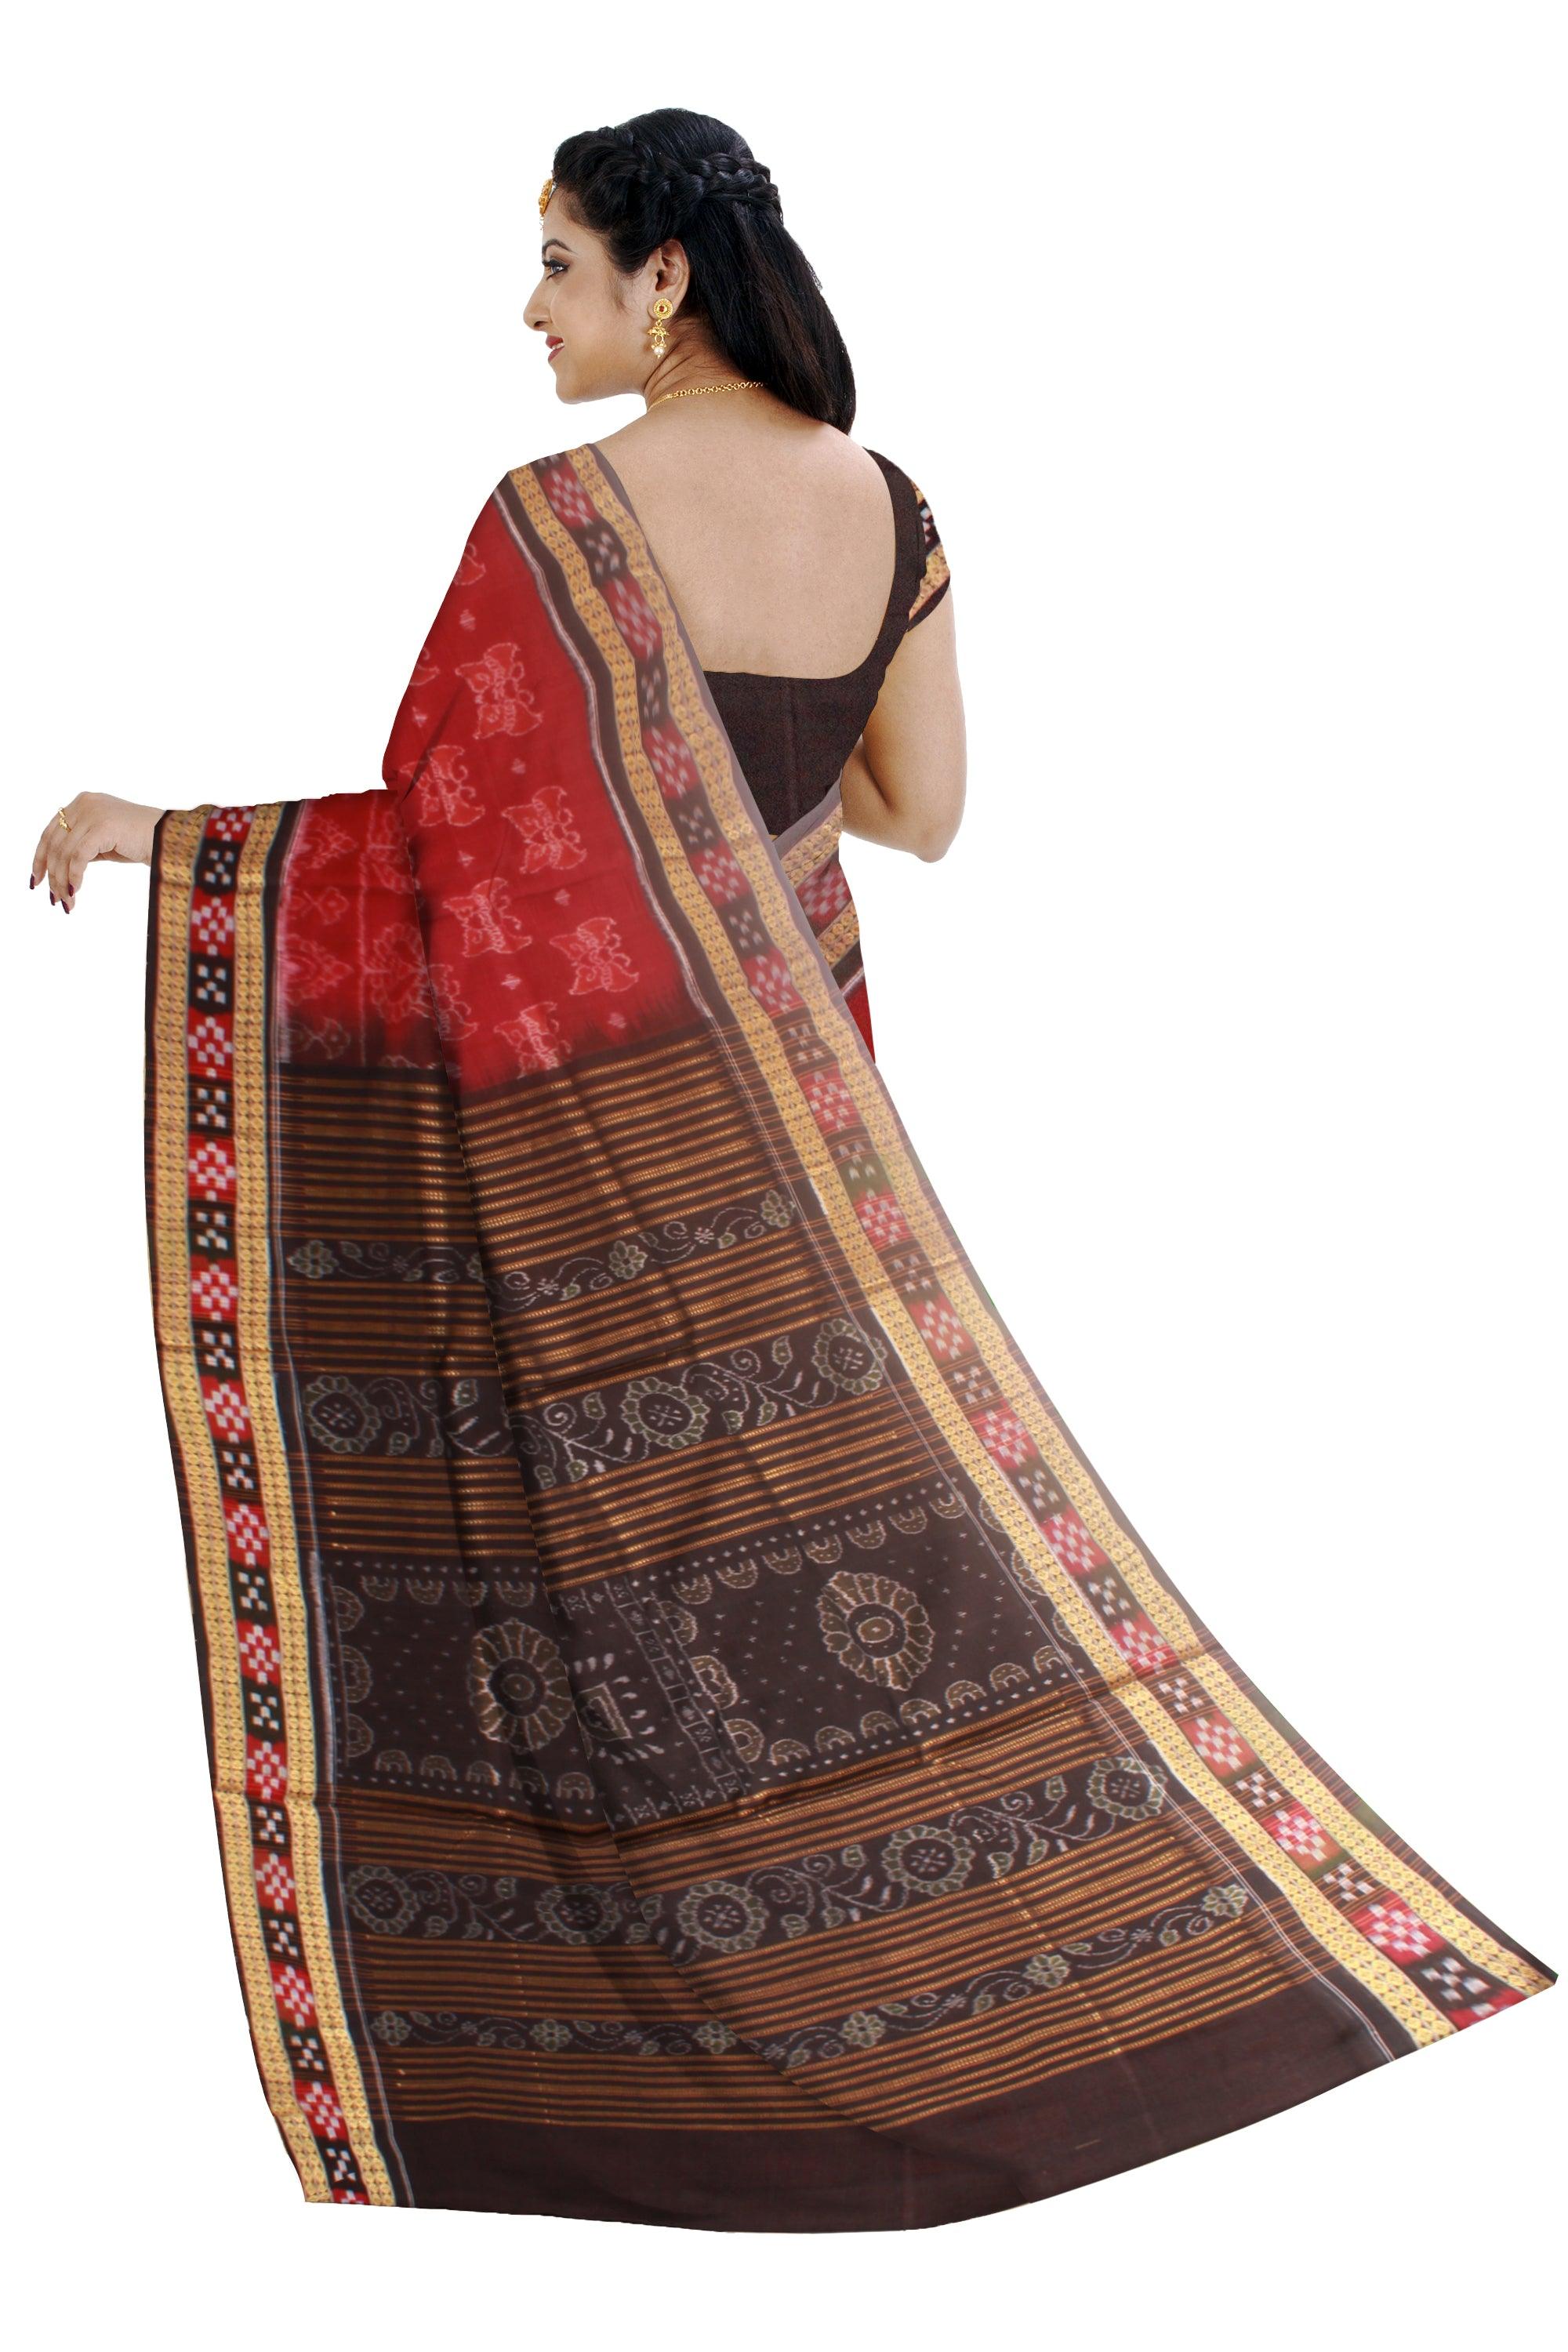 Sambalpuri cotton Saree in Red and Black Color  with blouse piece. - Koshali Arts & Crafts Enterprise